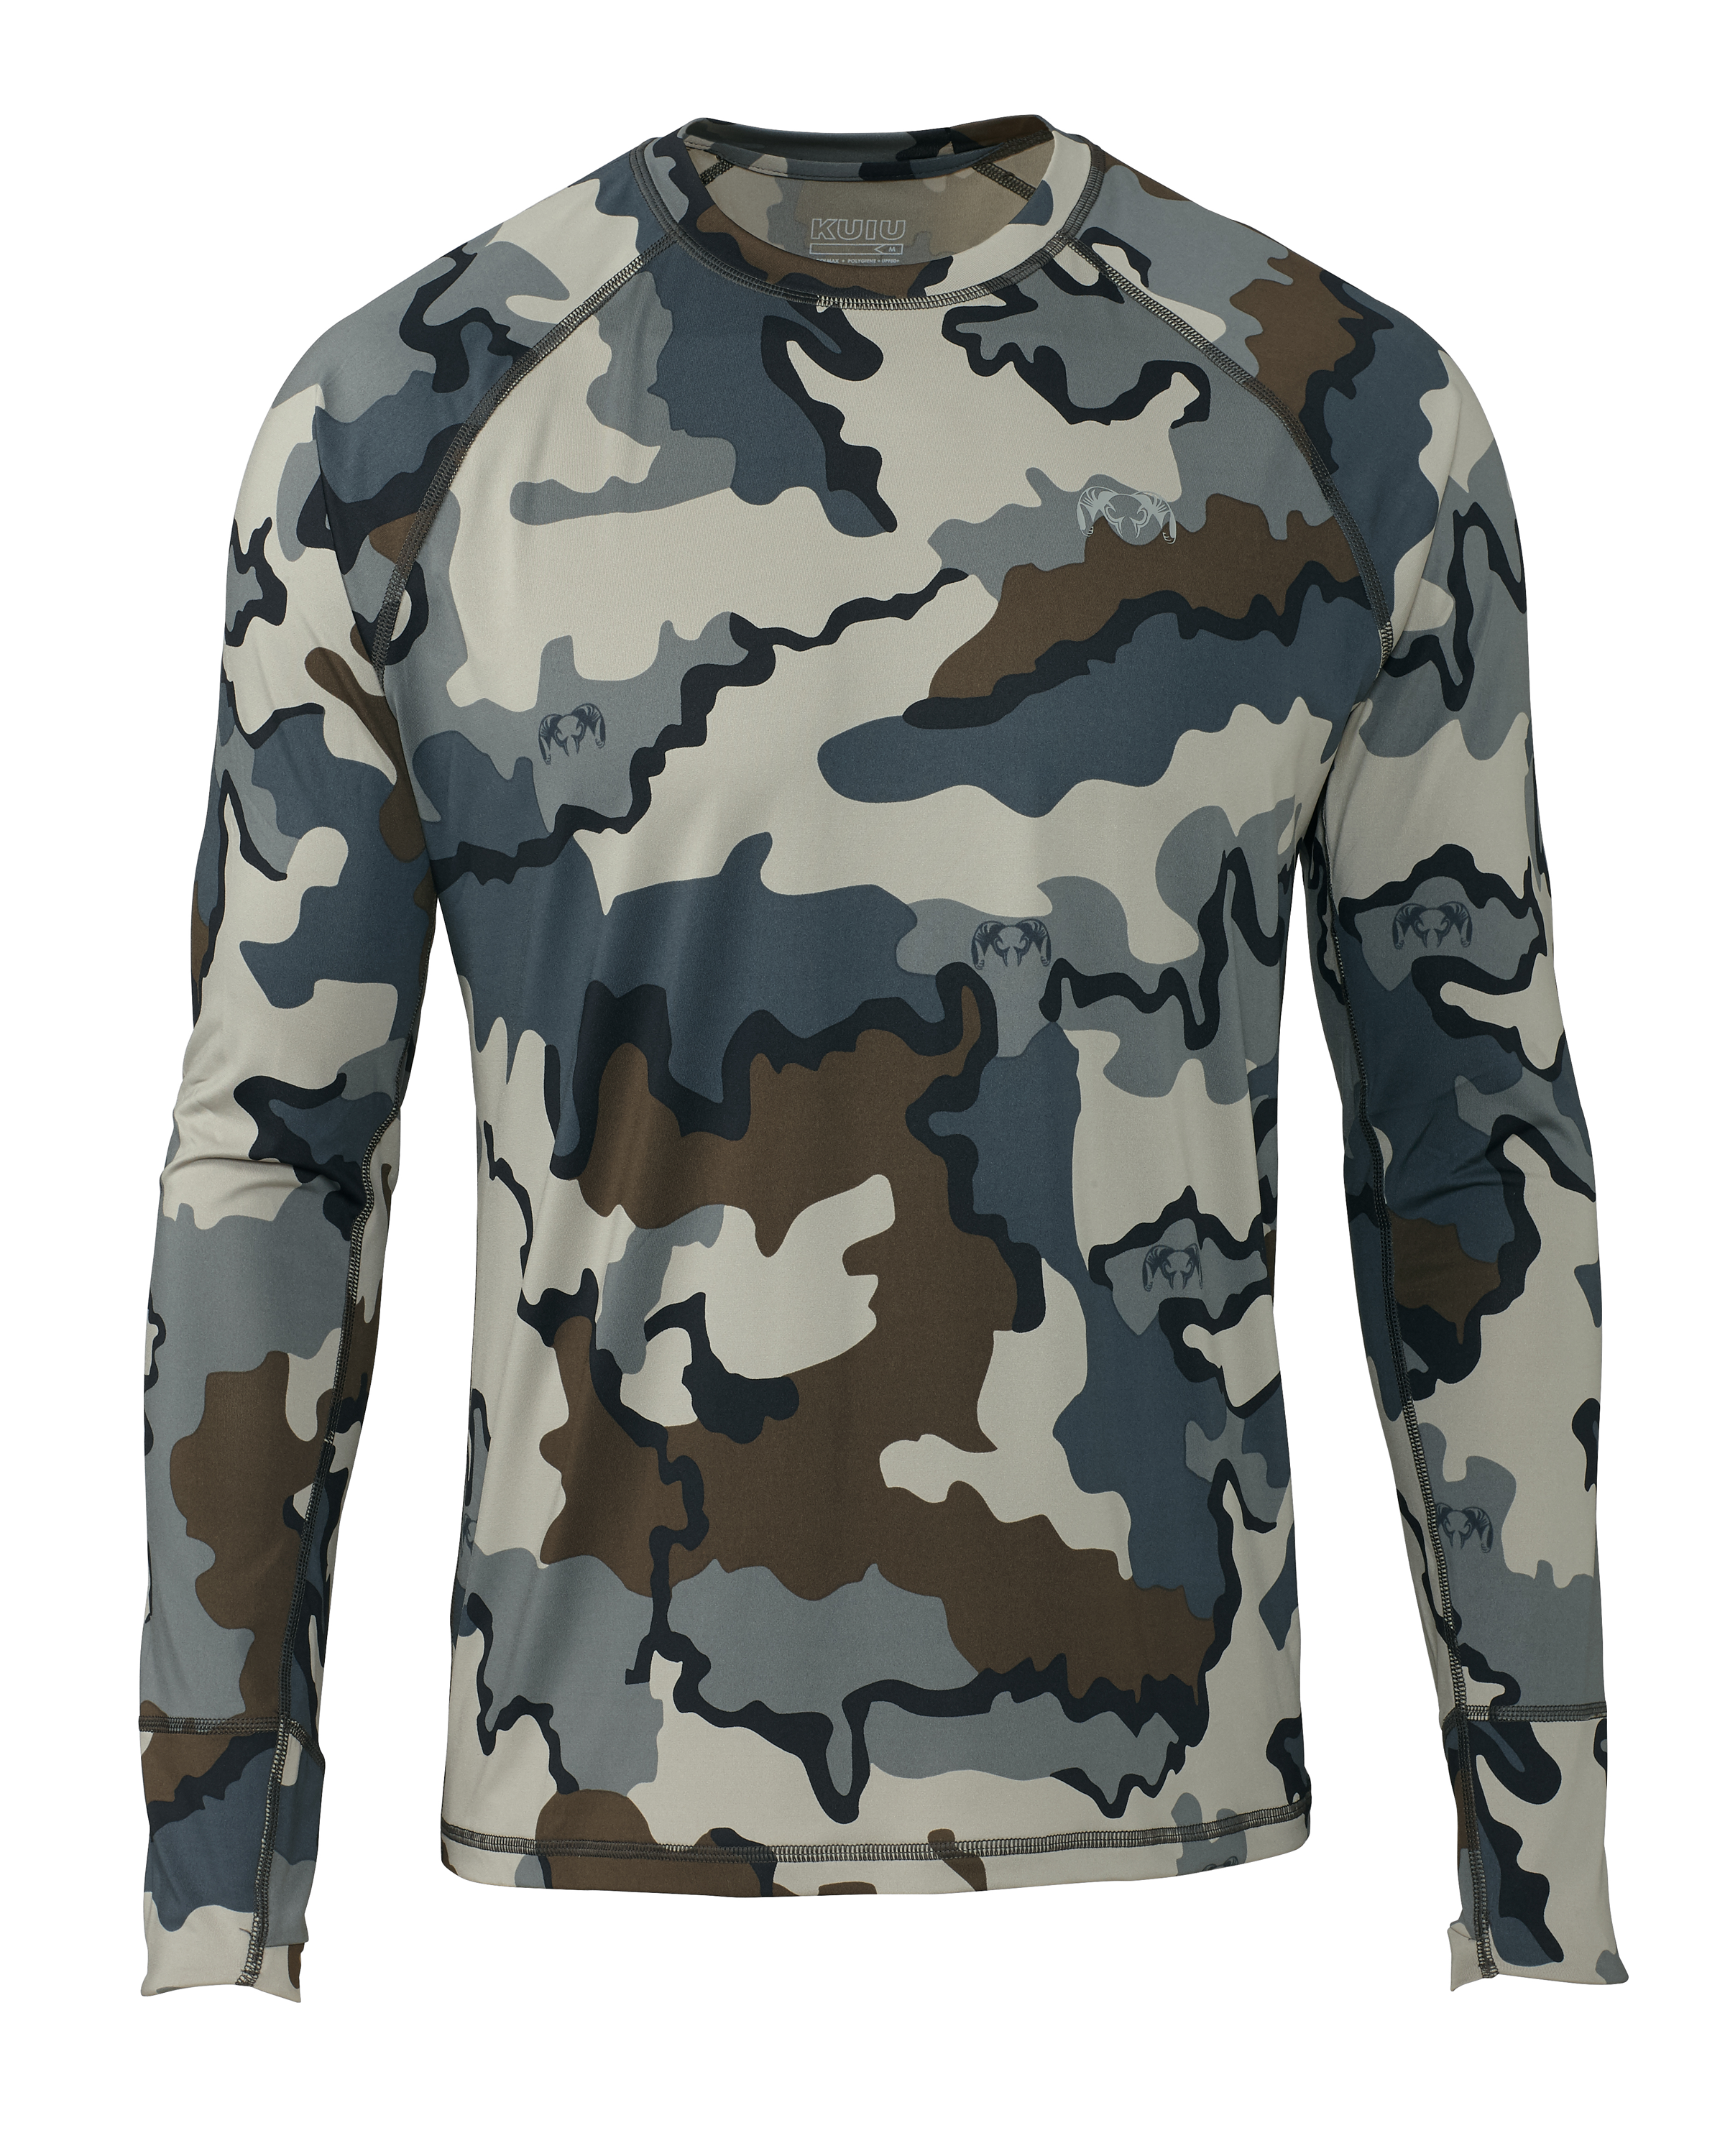 KUIU Gila Long Sleeves Crew Hunting Shirt in Vias | Large